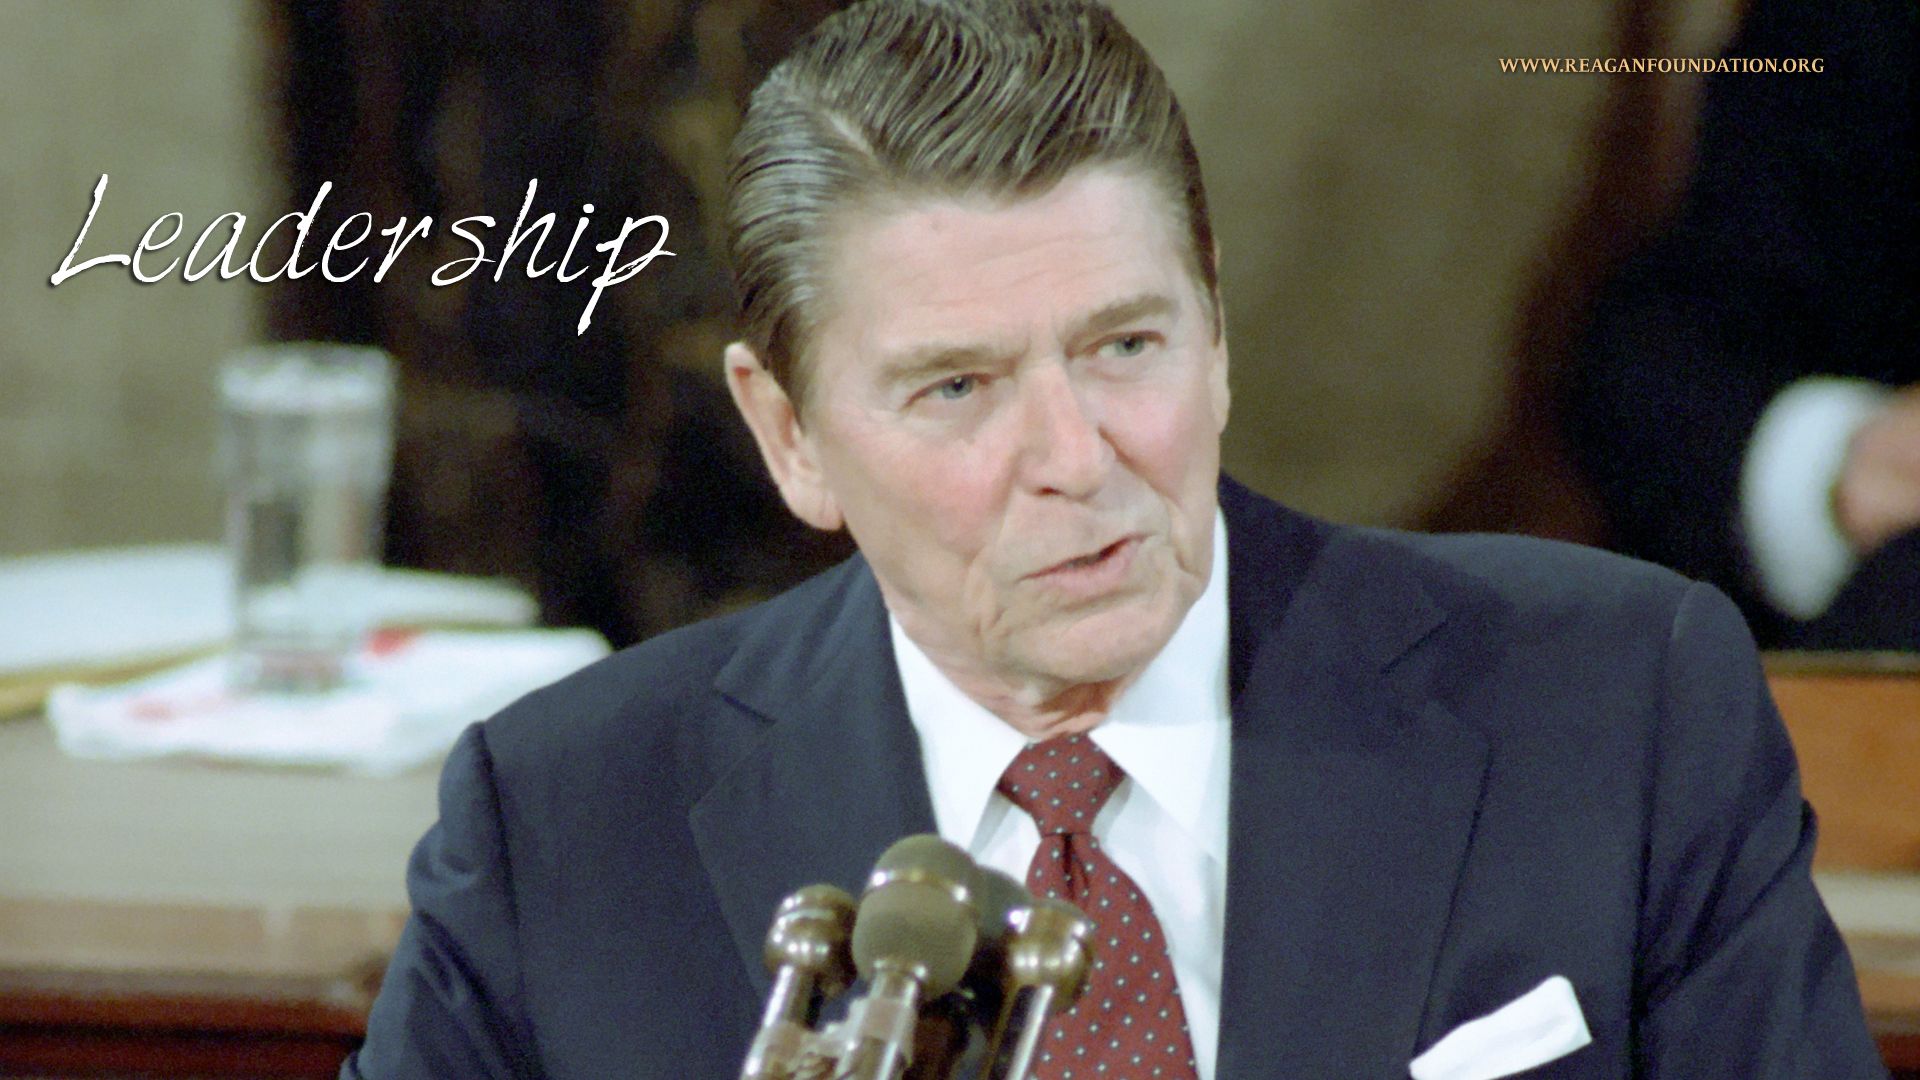 Reagan Wallpaper Archive - Ronald Reagan Presidential Foundation